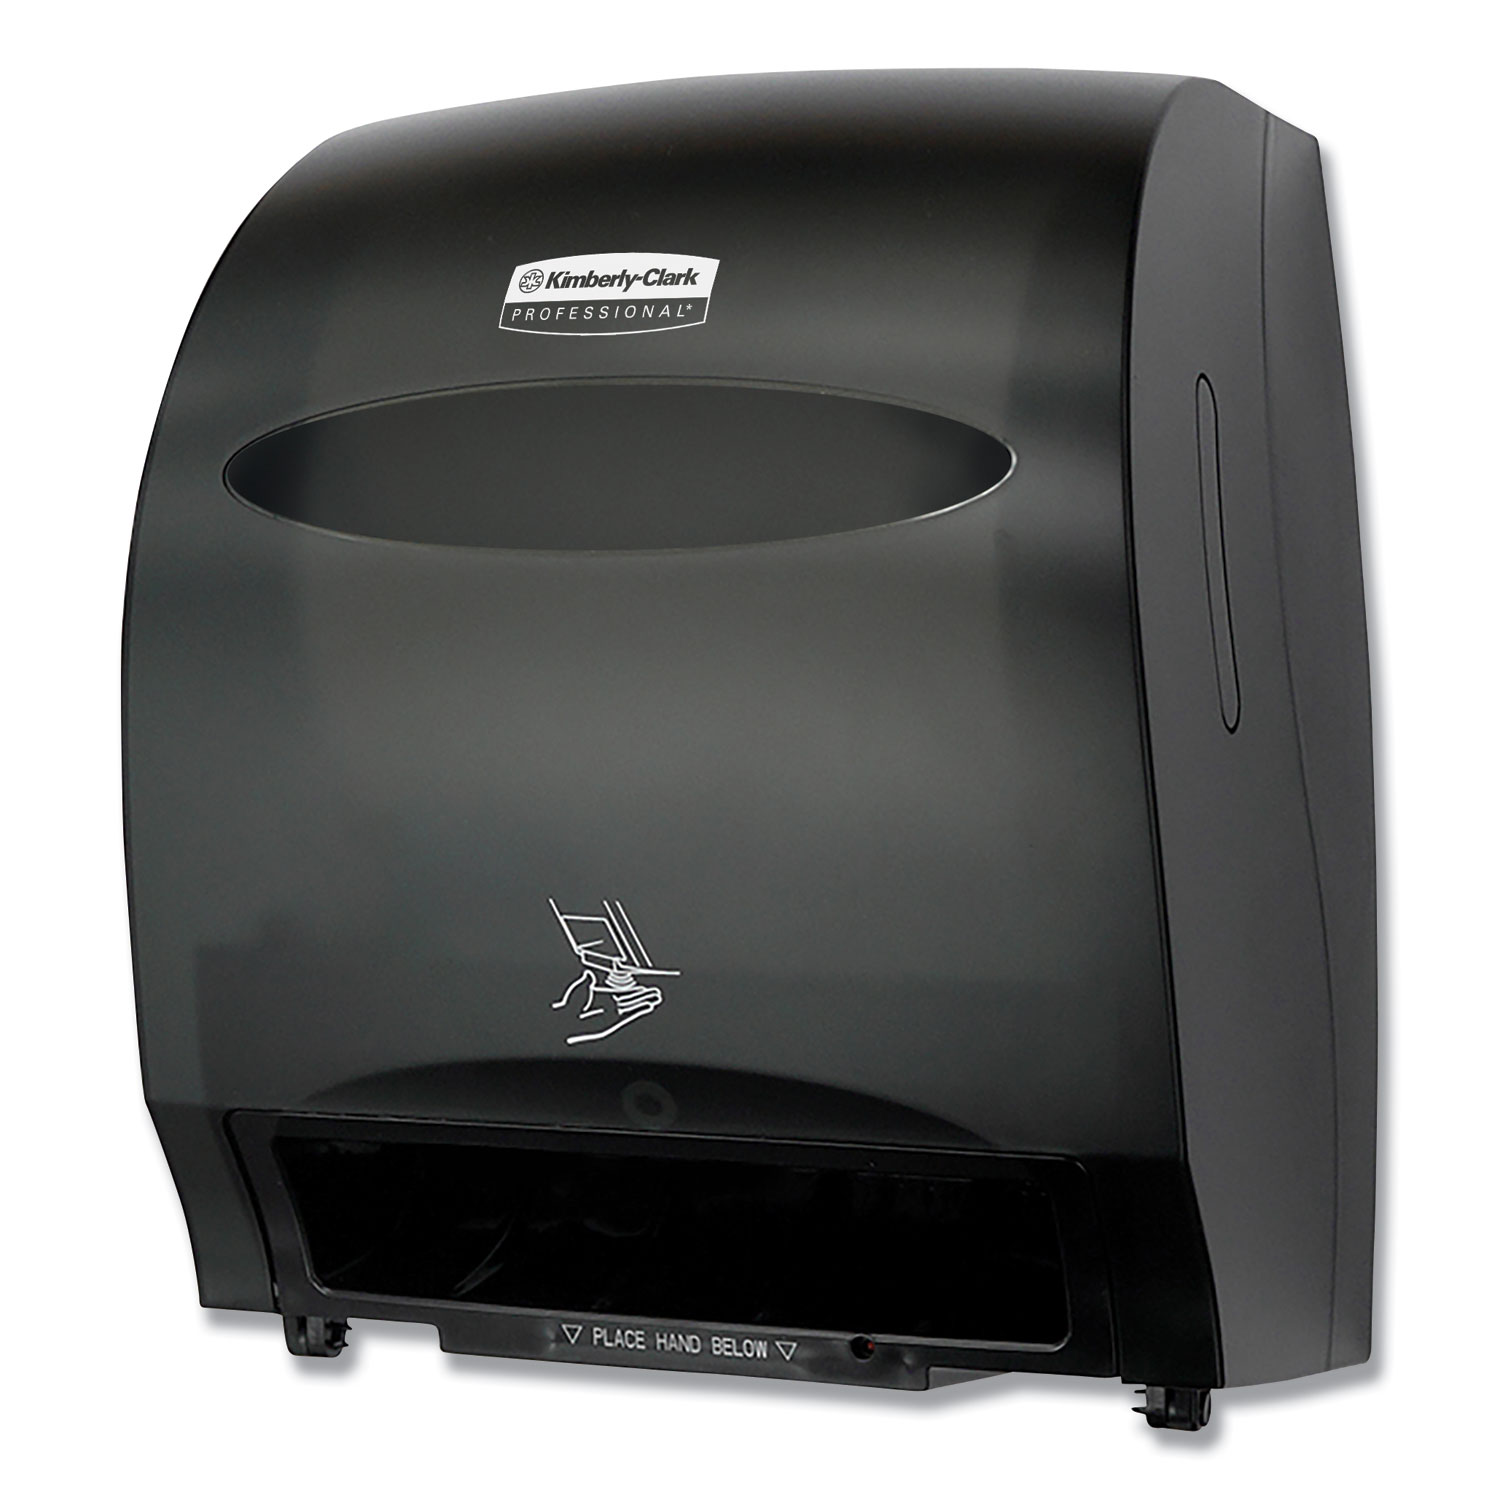 Kimberly-Clark Professional™ Electronic Hard Roll Towel Dispenser - Black, 12.70 x 15.76 x 9.57